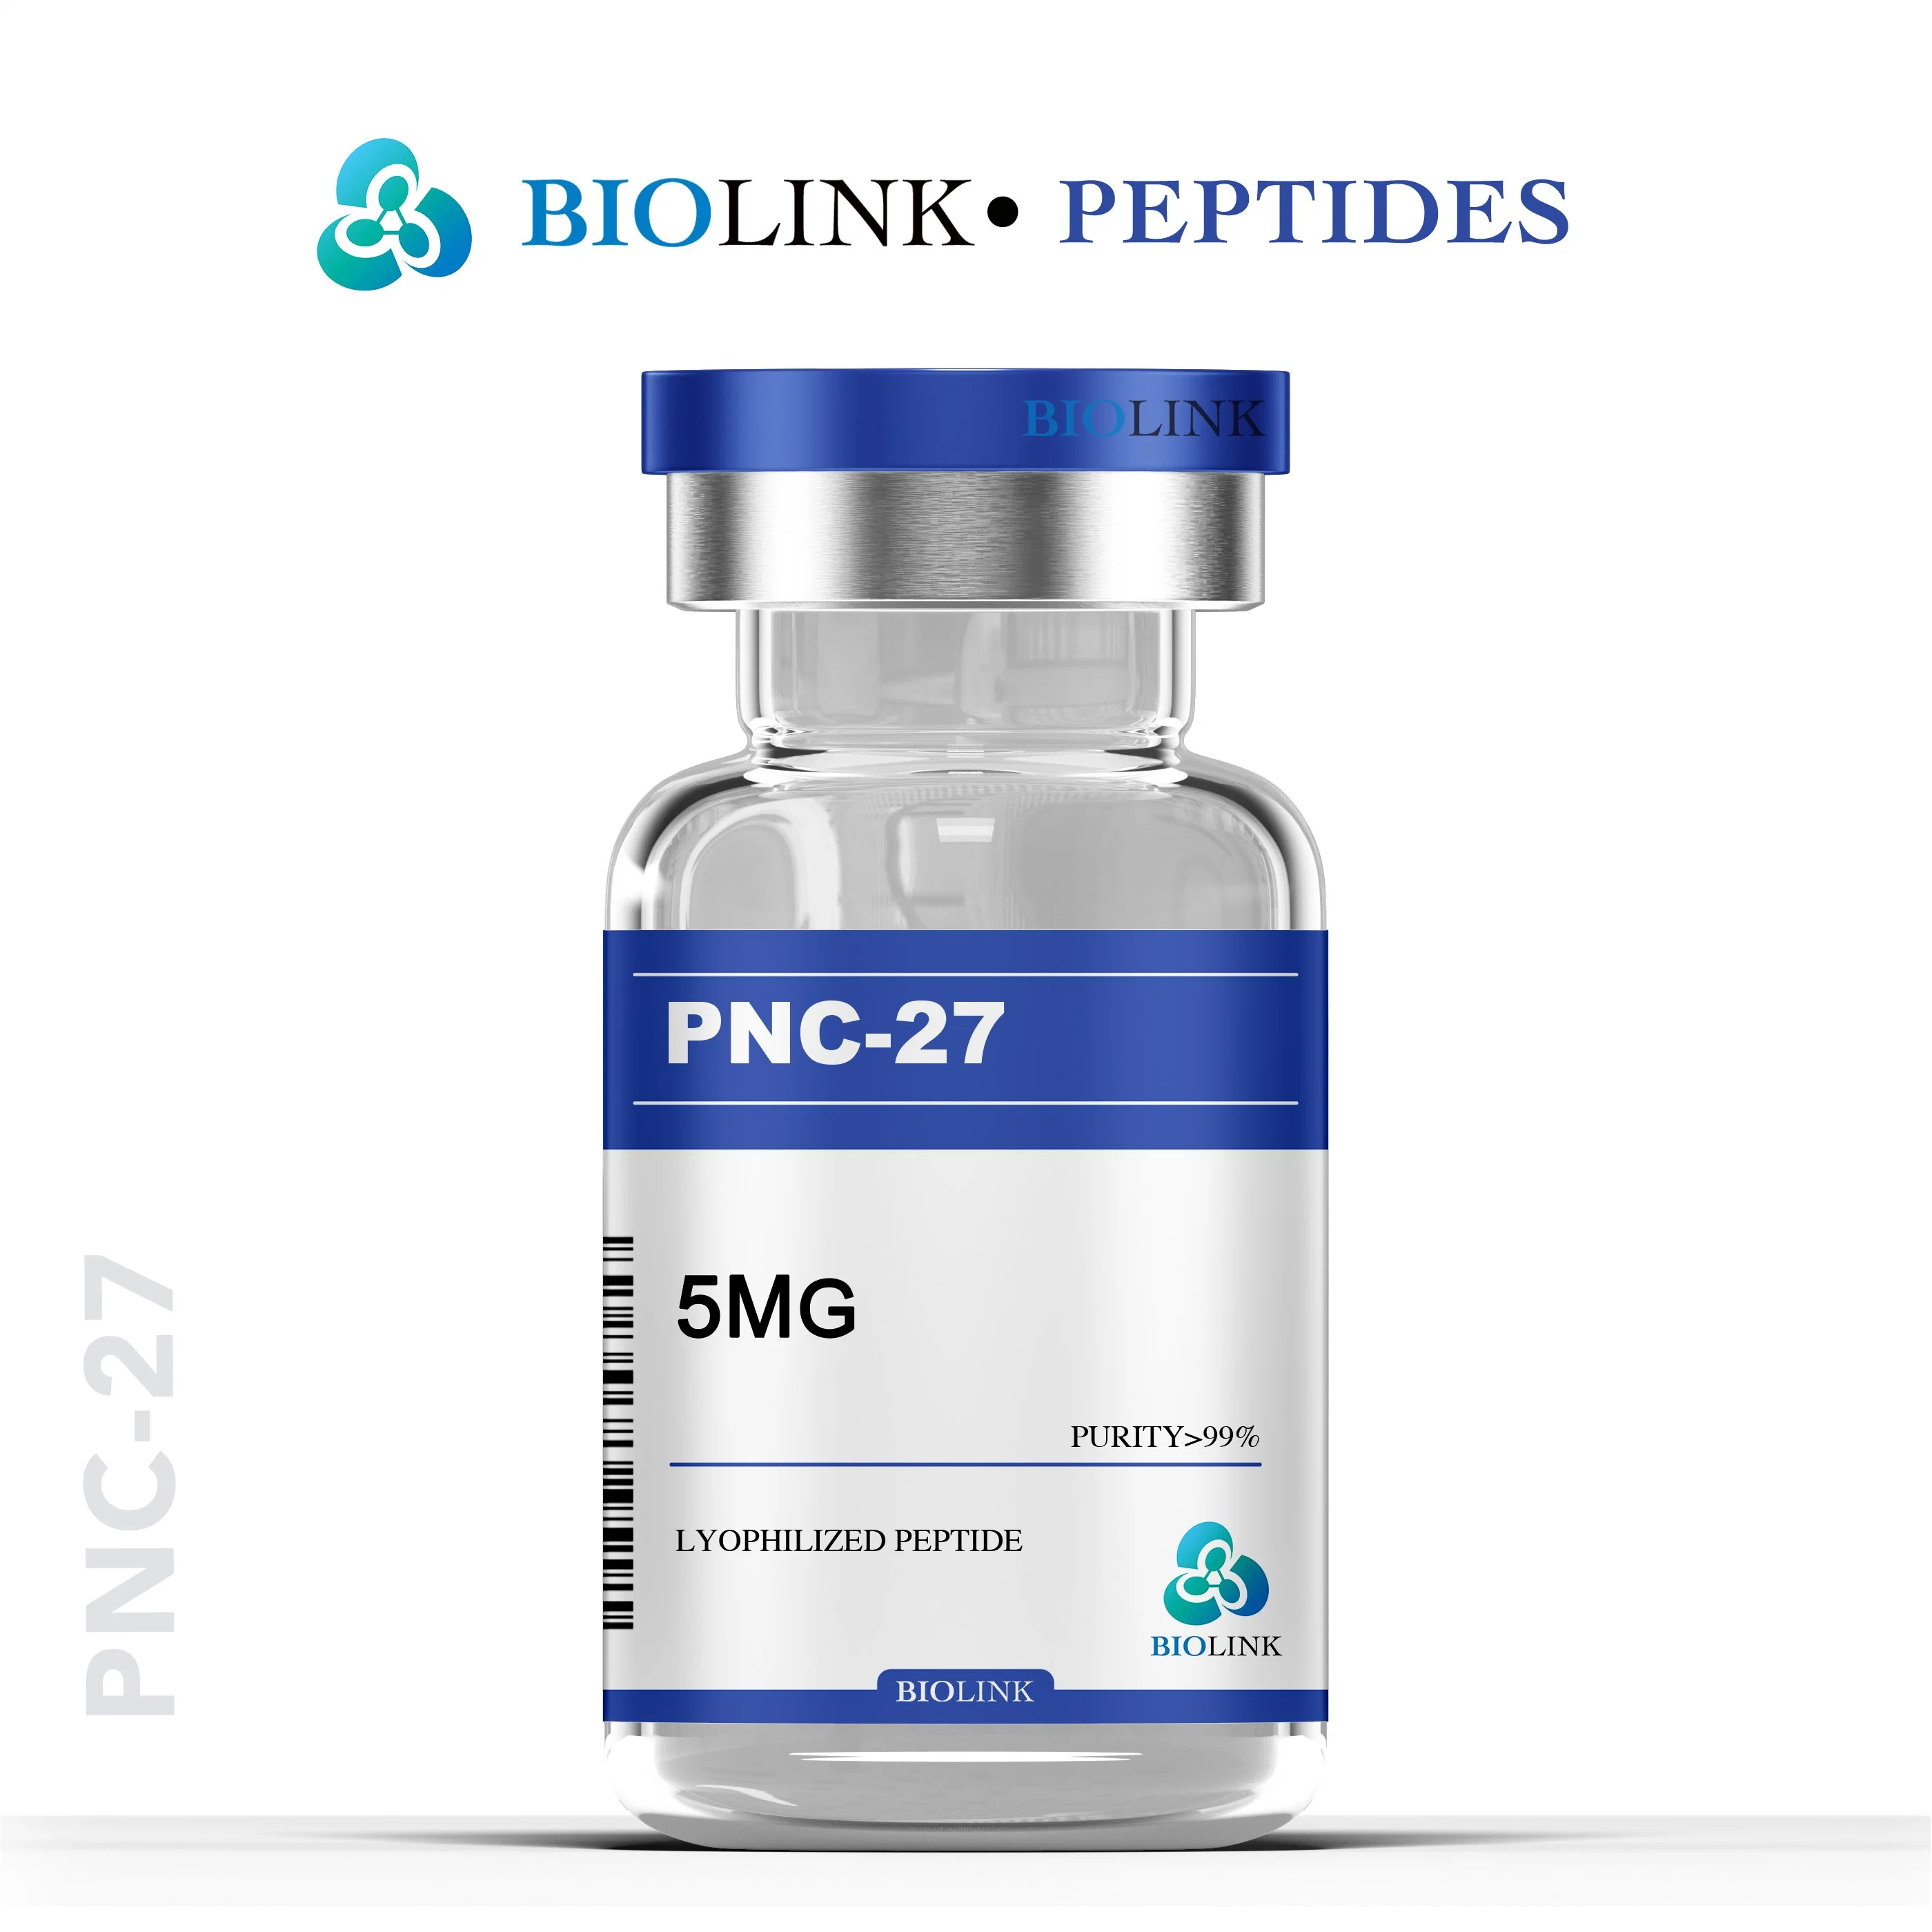 Biolink Peptides Selank N-Acetyl Selank 10mg Sweden Wholesale/Suppliers Sample Support CAS: 129954-34-3